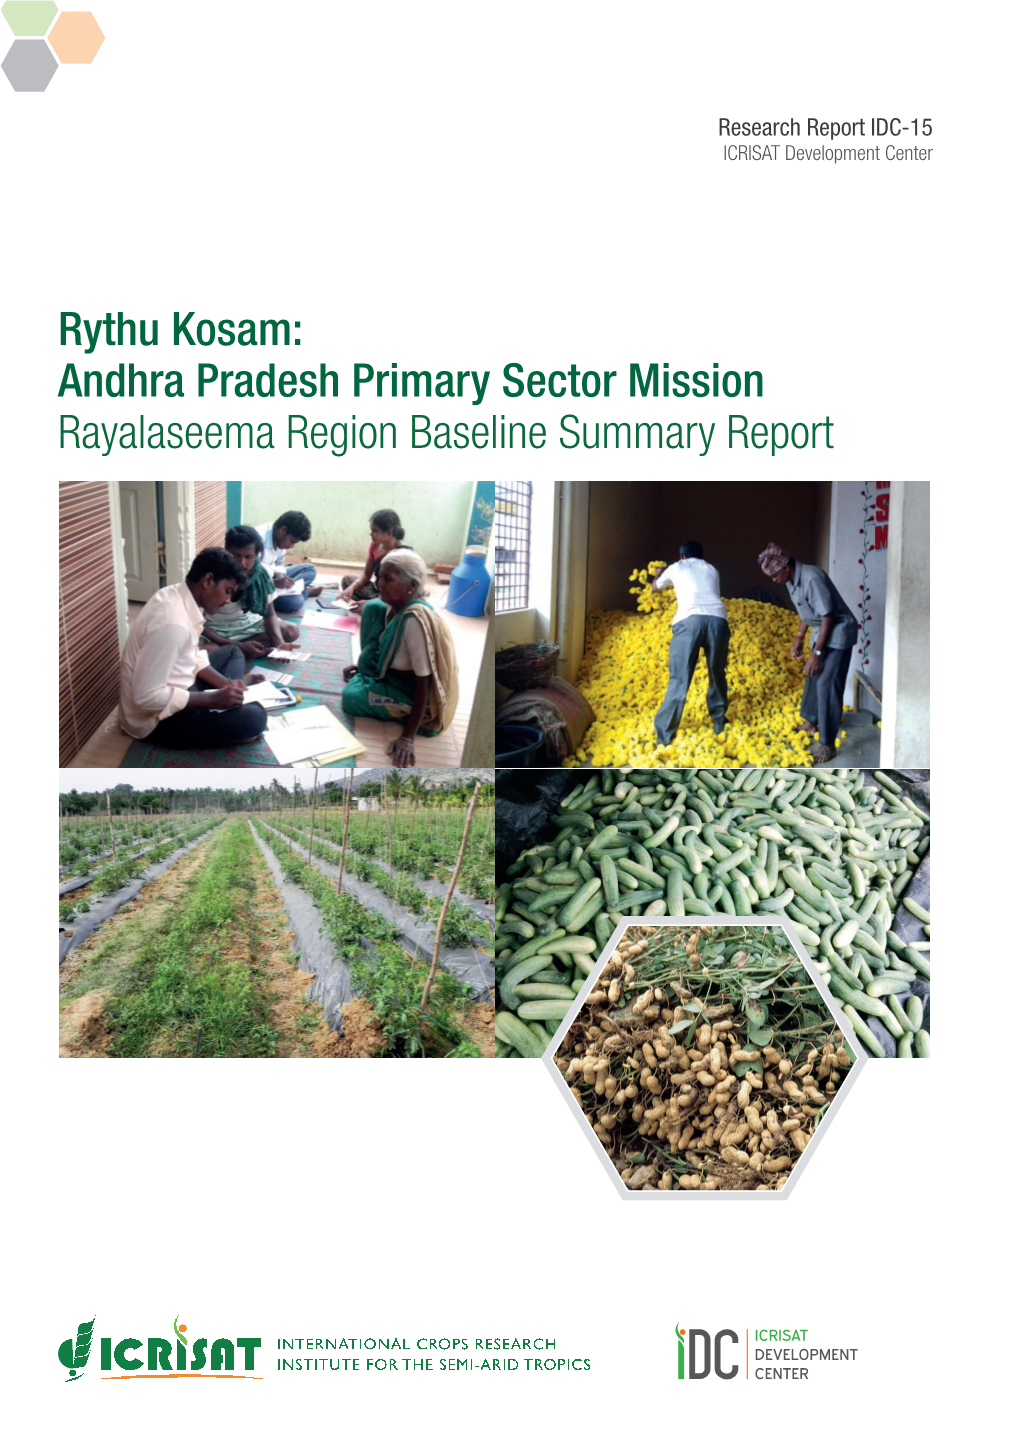 Rythu Kosam: Andhra Pradesh Primary Sector Mission Rayalaseema Region Baseline Summary Report